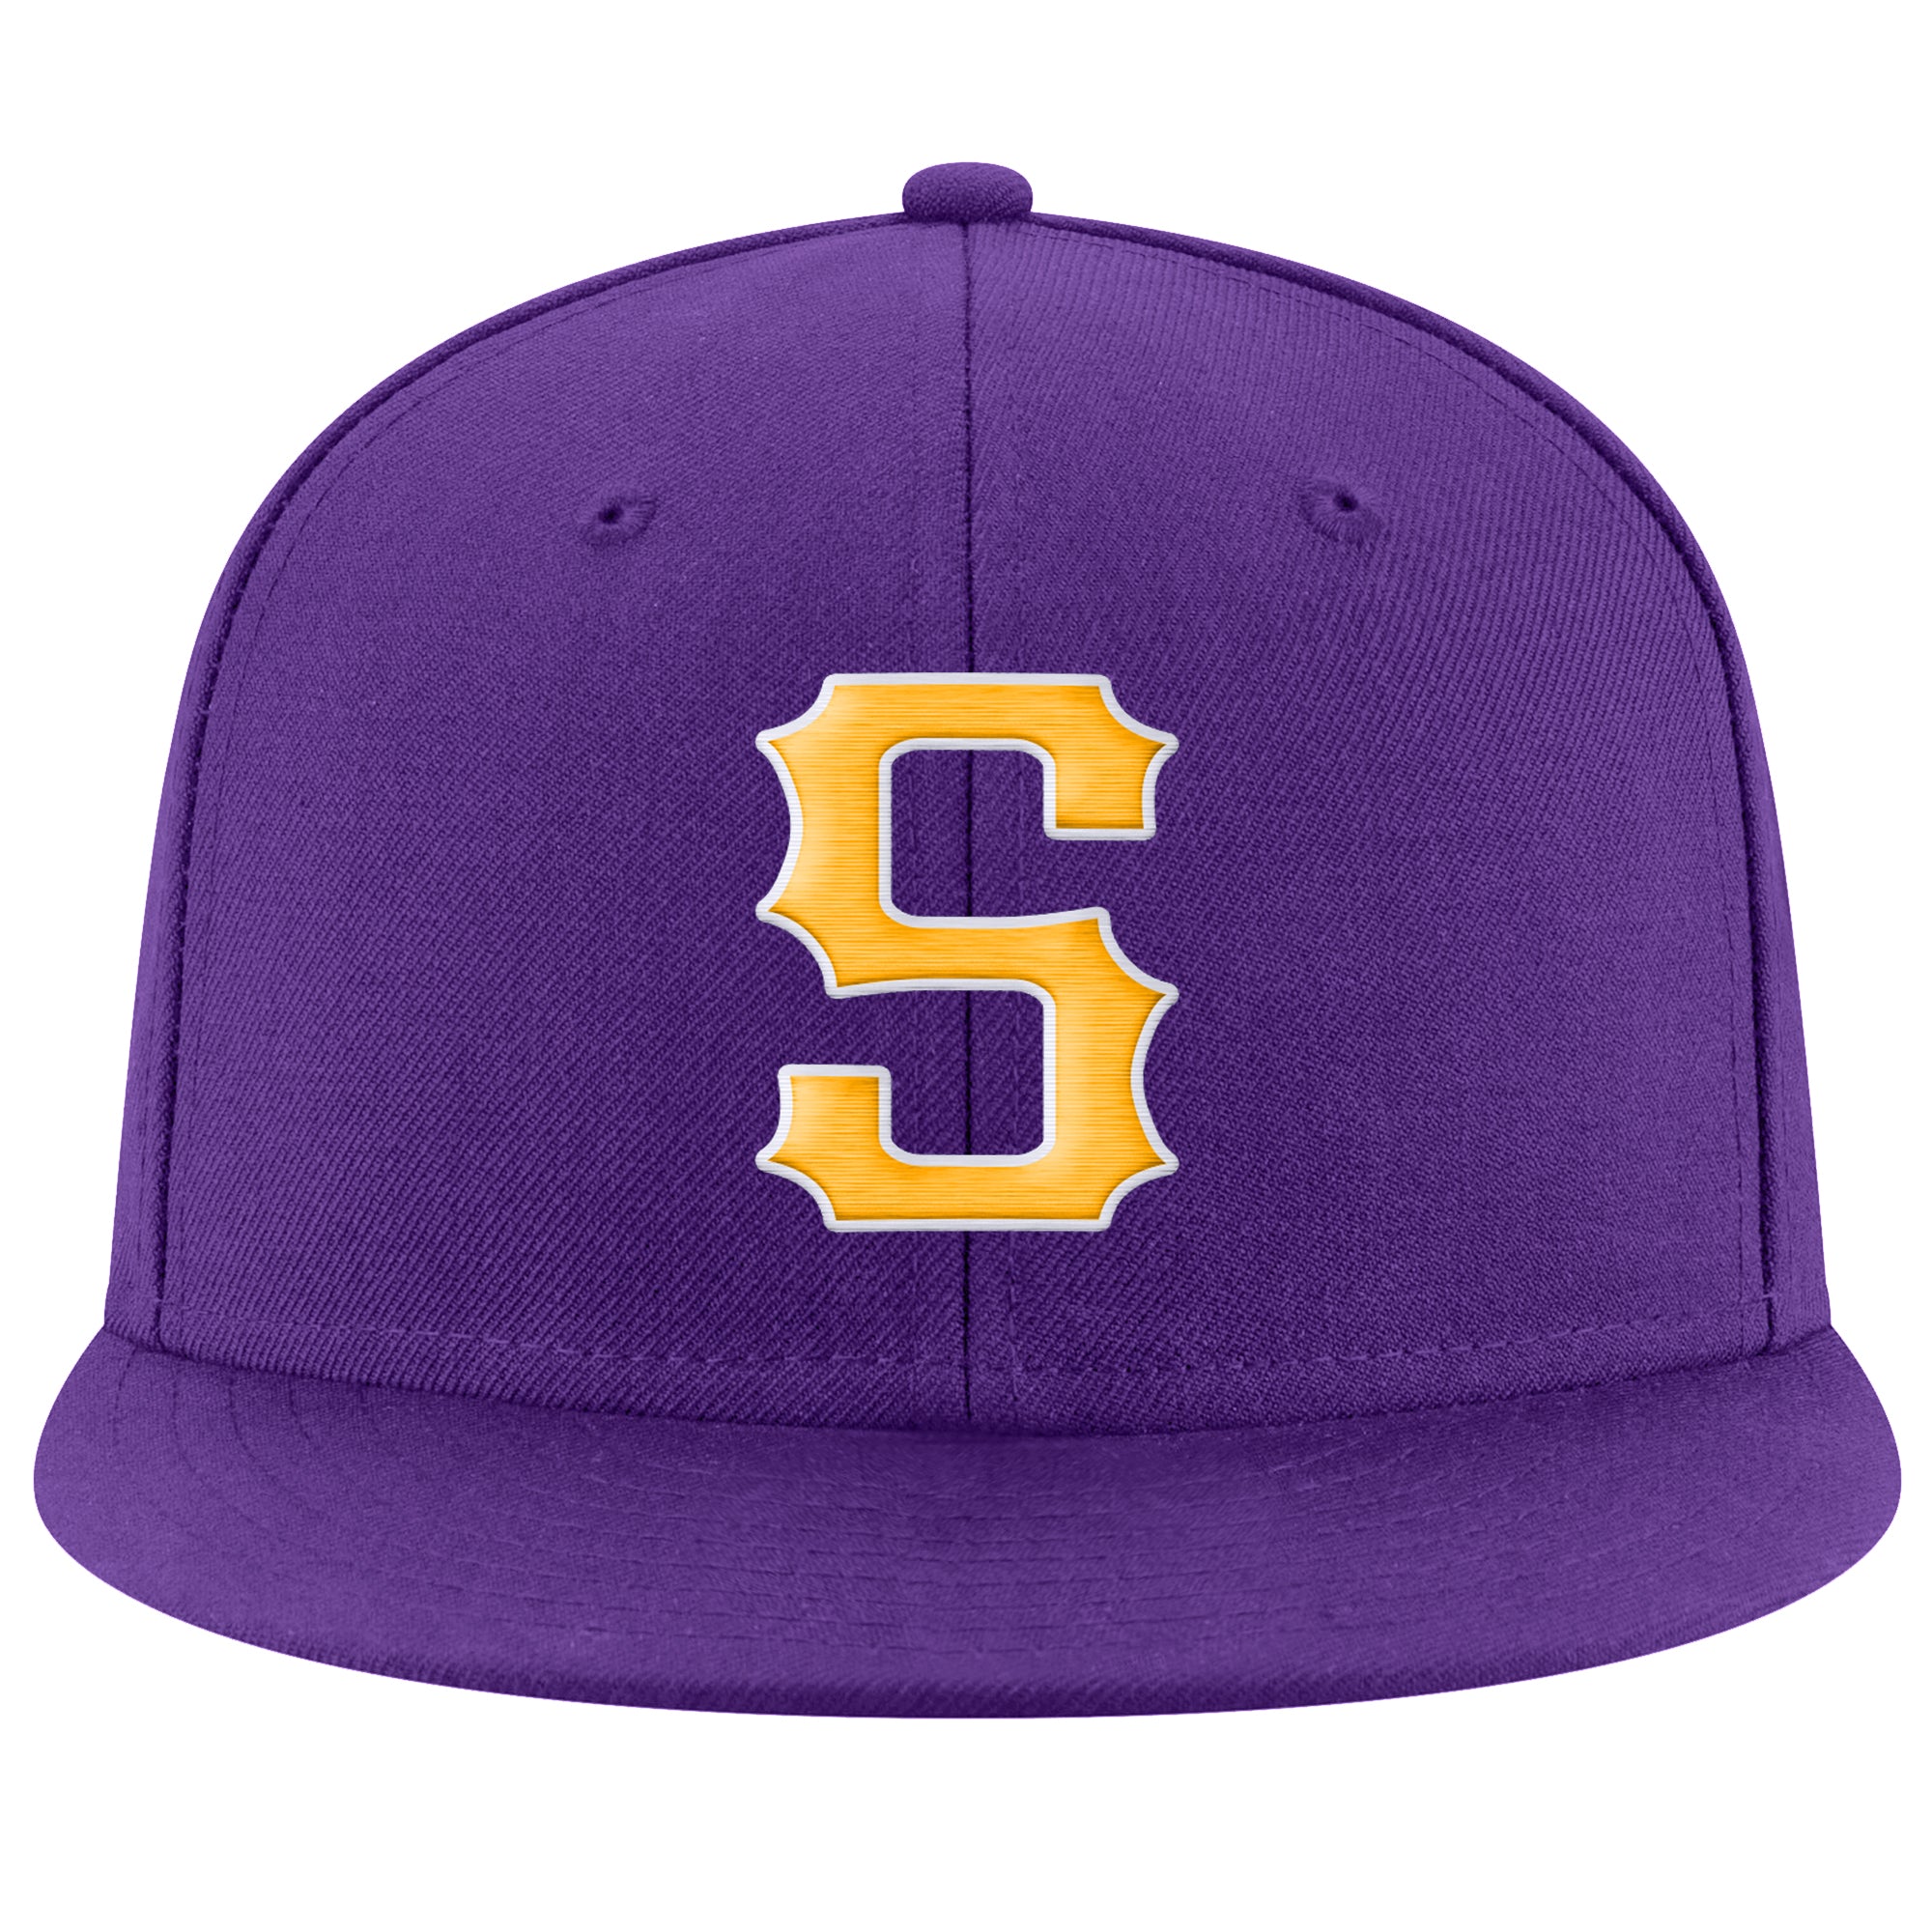 Purple and Gold Baseball Cap